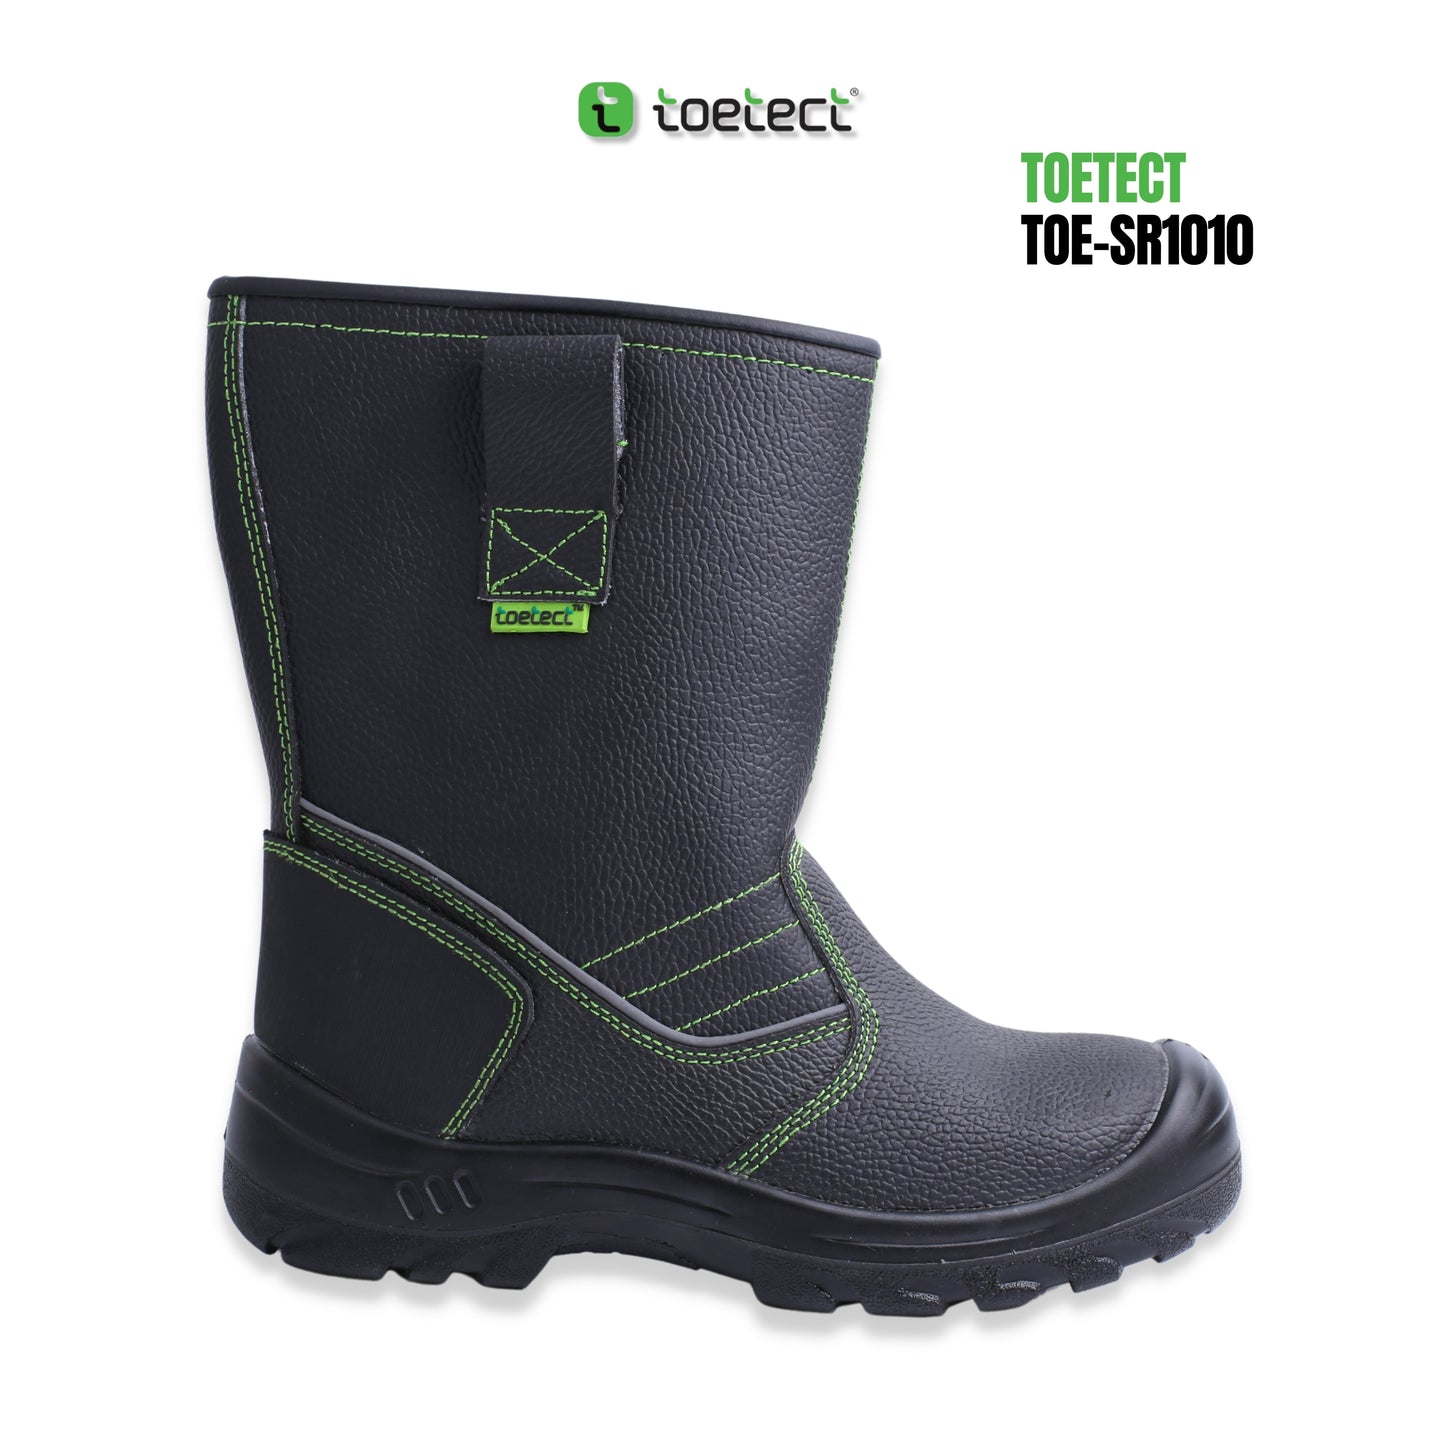 ToeTect TOE-SR1010 Men High Cut Slip-On Safety Boots